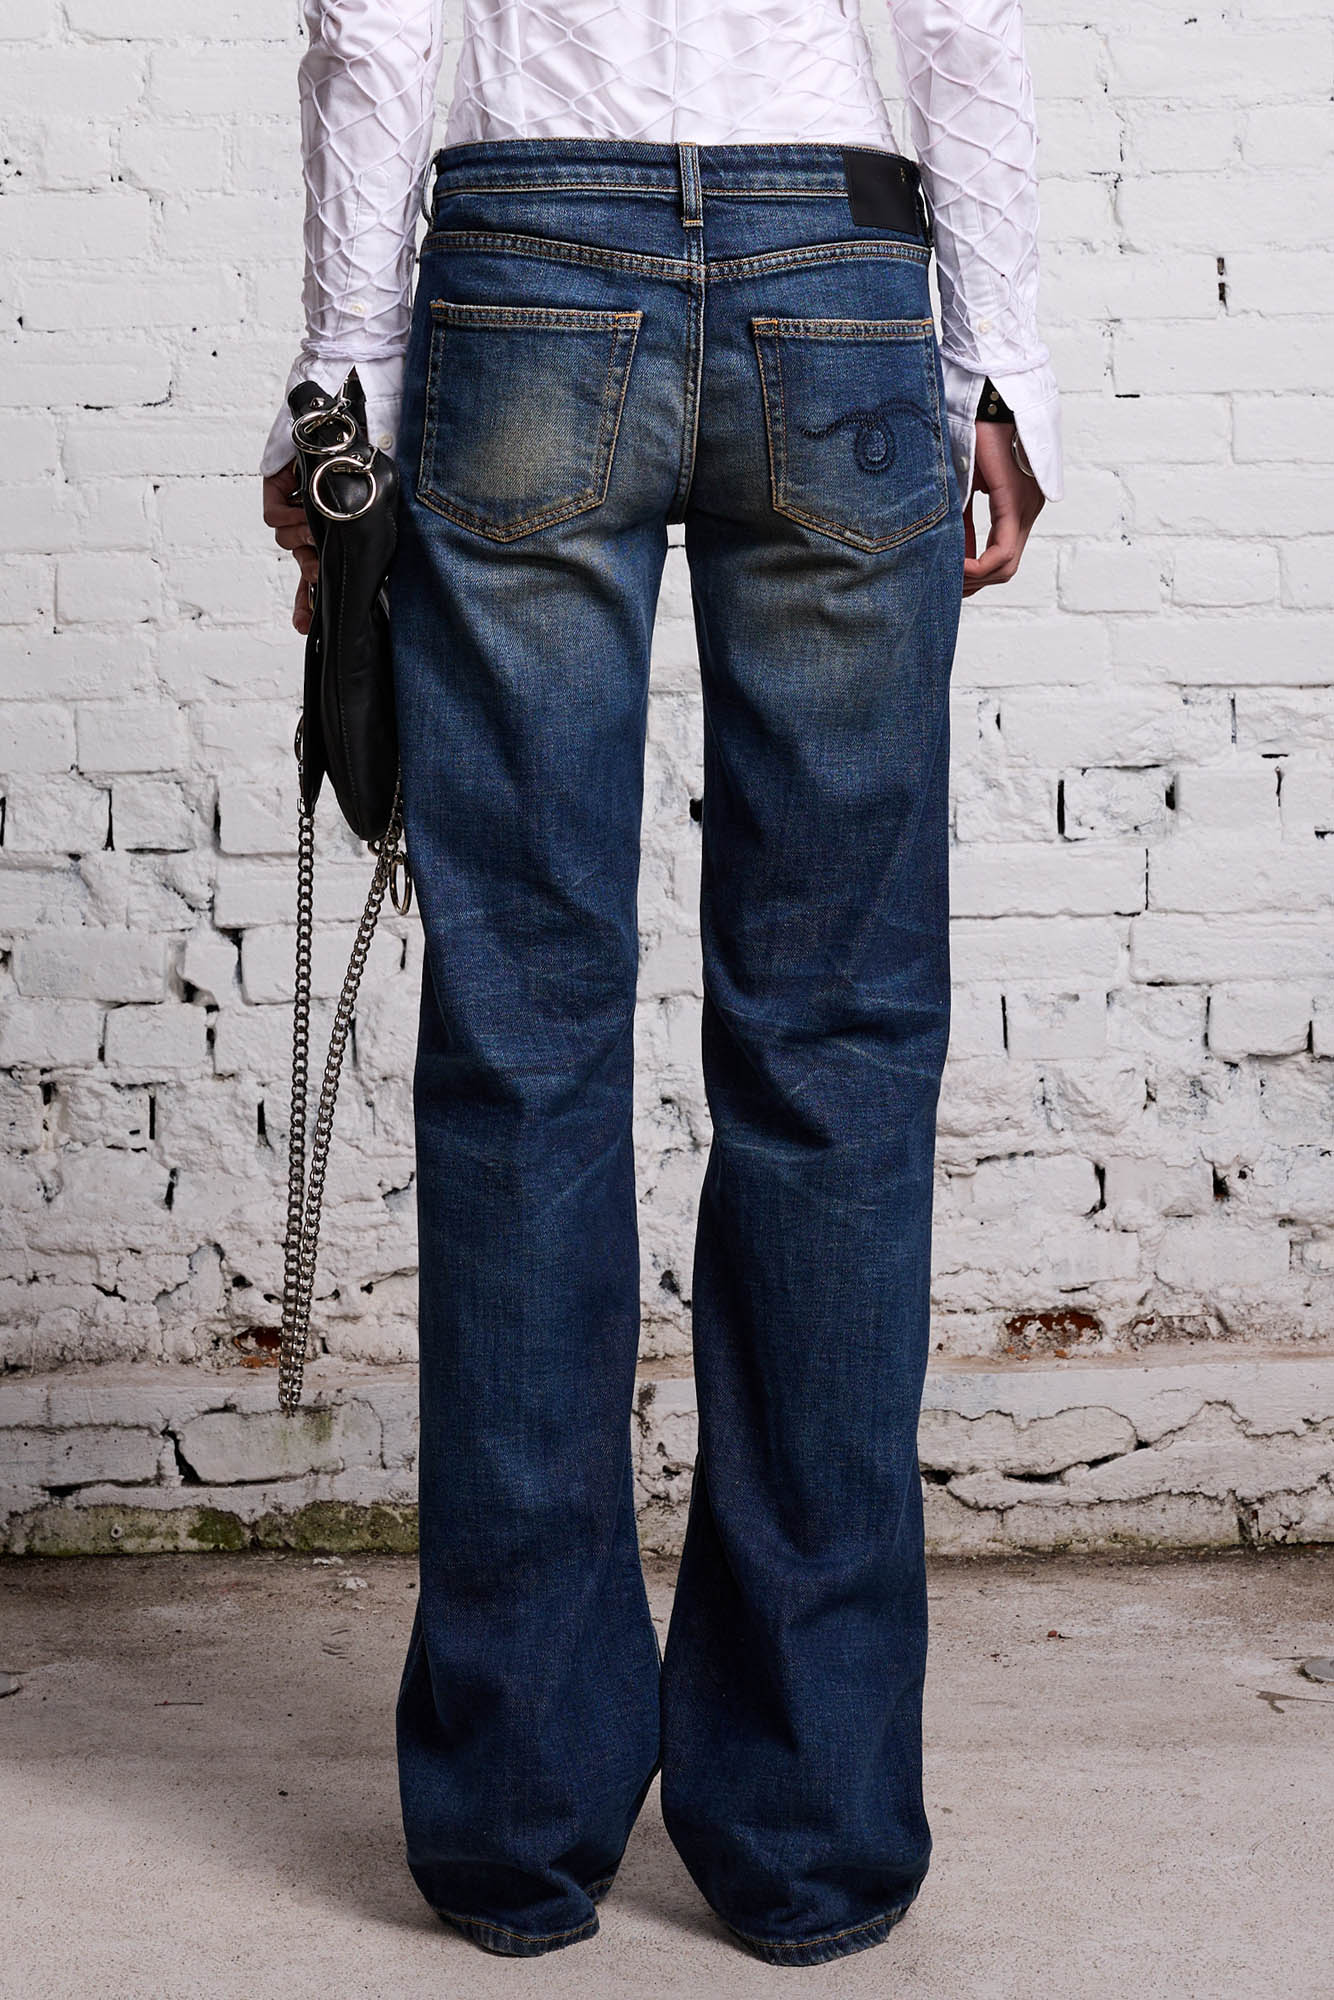 R13 Boy Flare Jeans in Ansel Blue